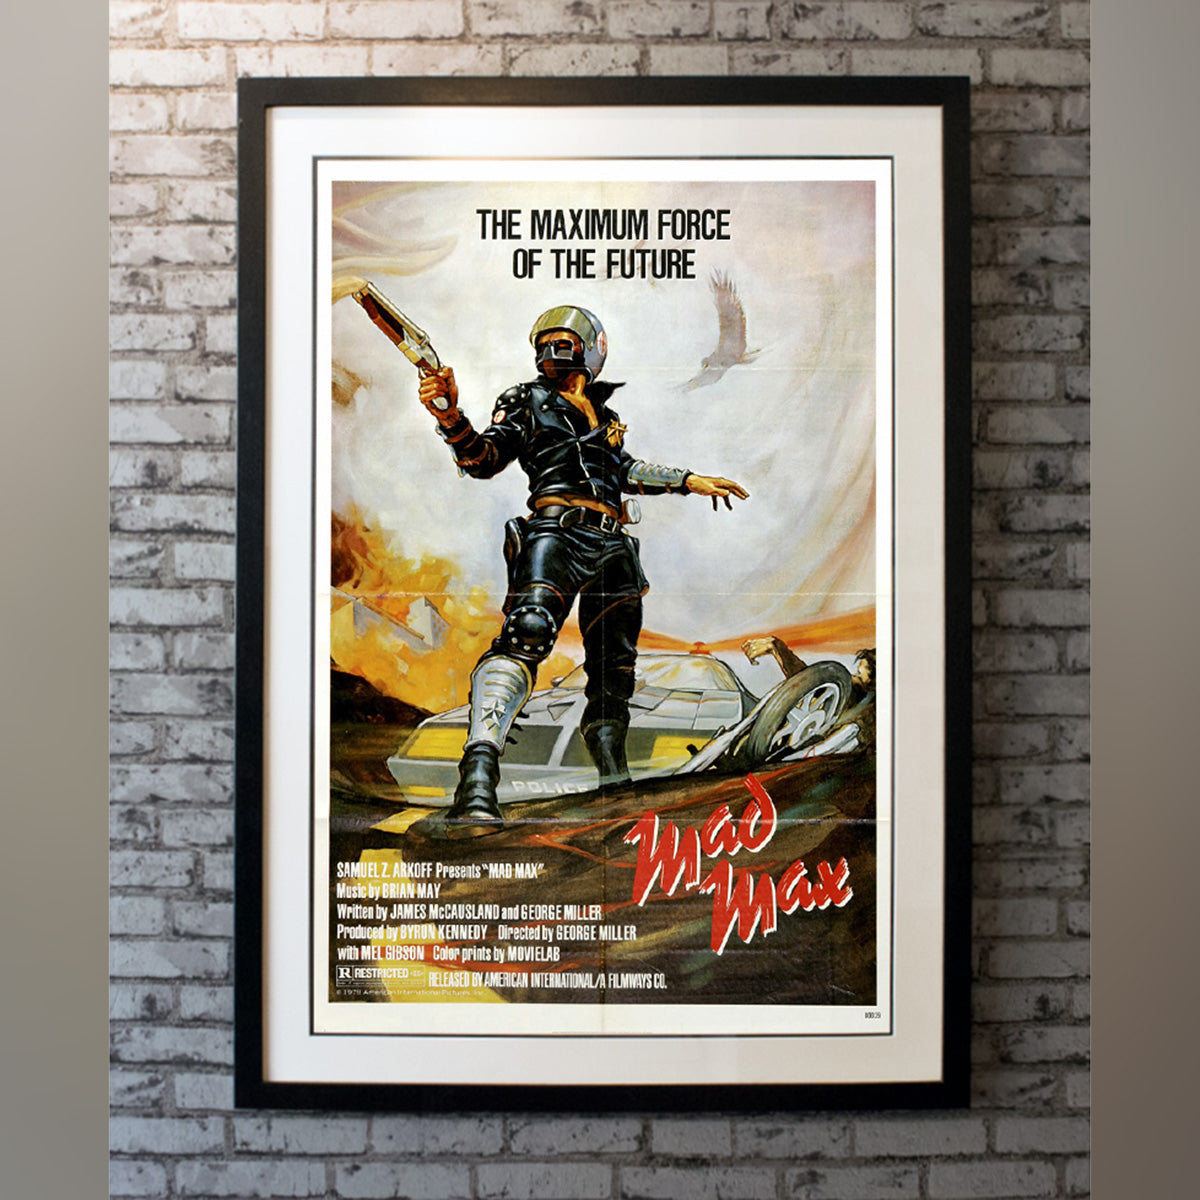 Original Movie Poster of Mad Max (1979)